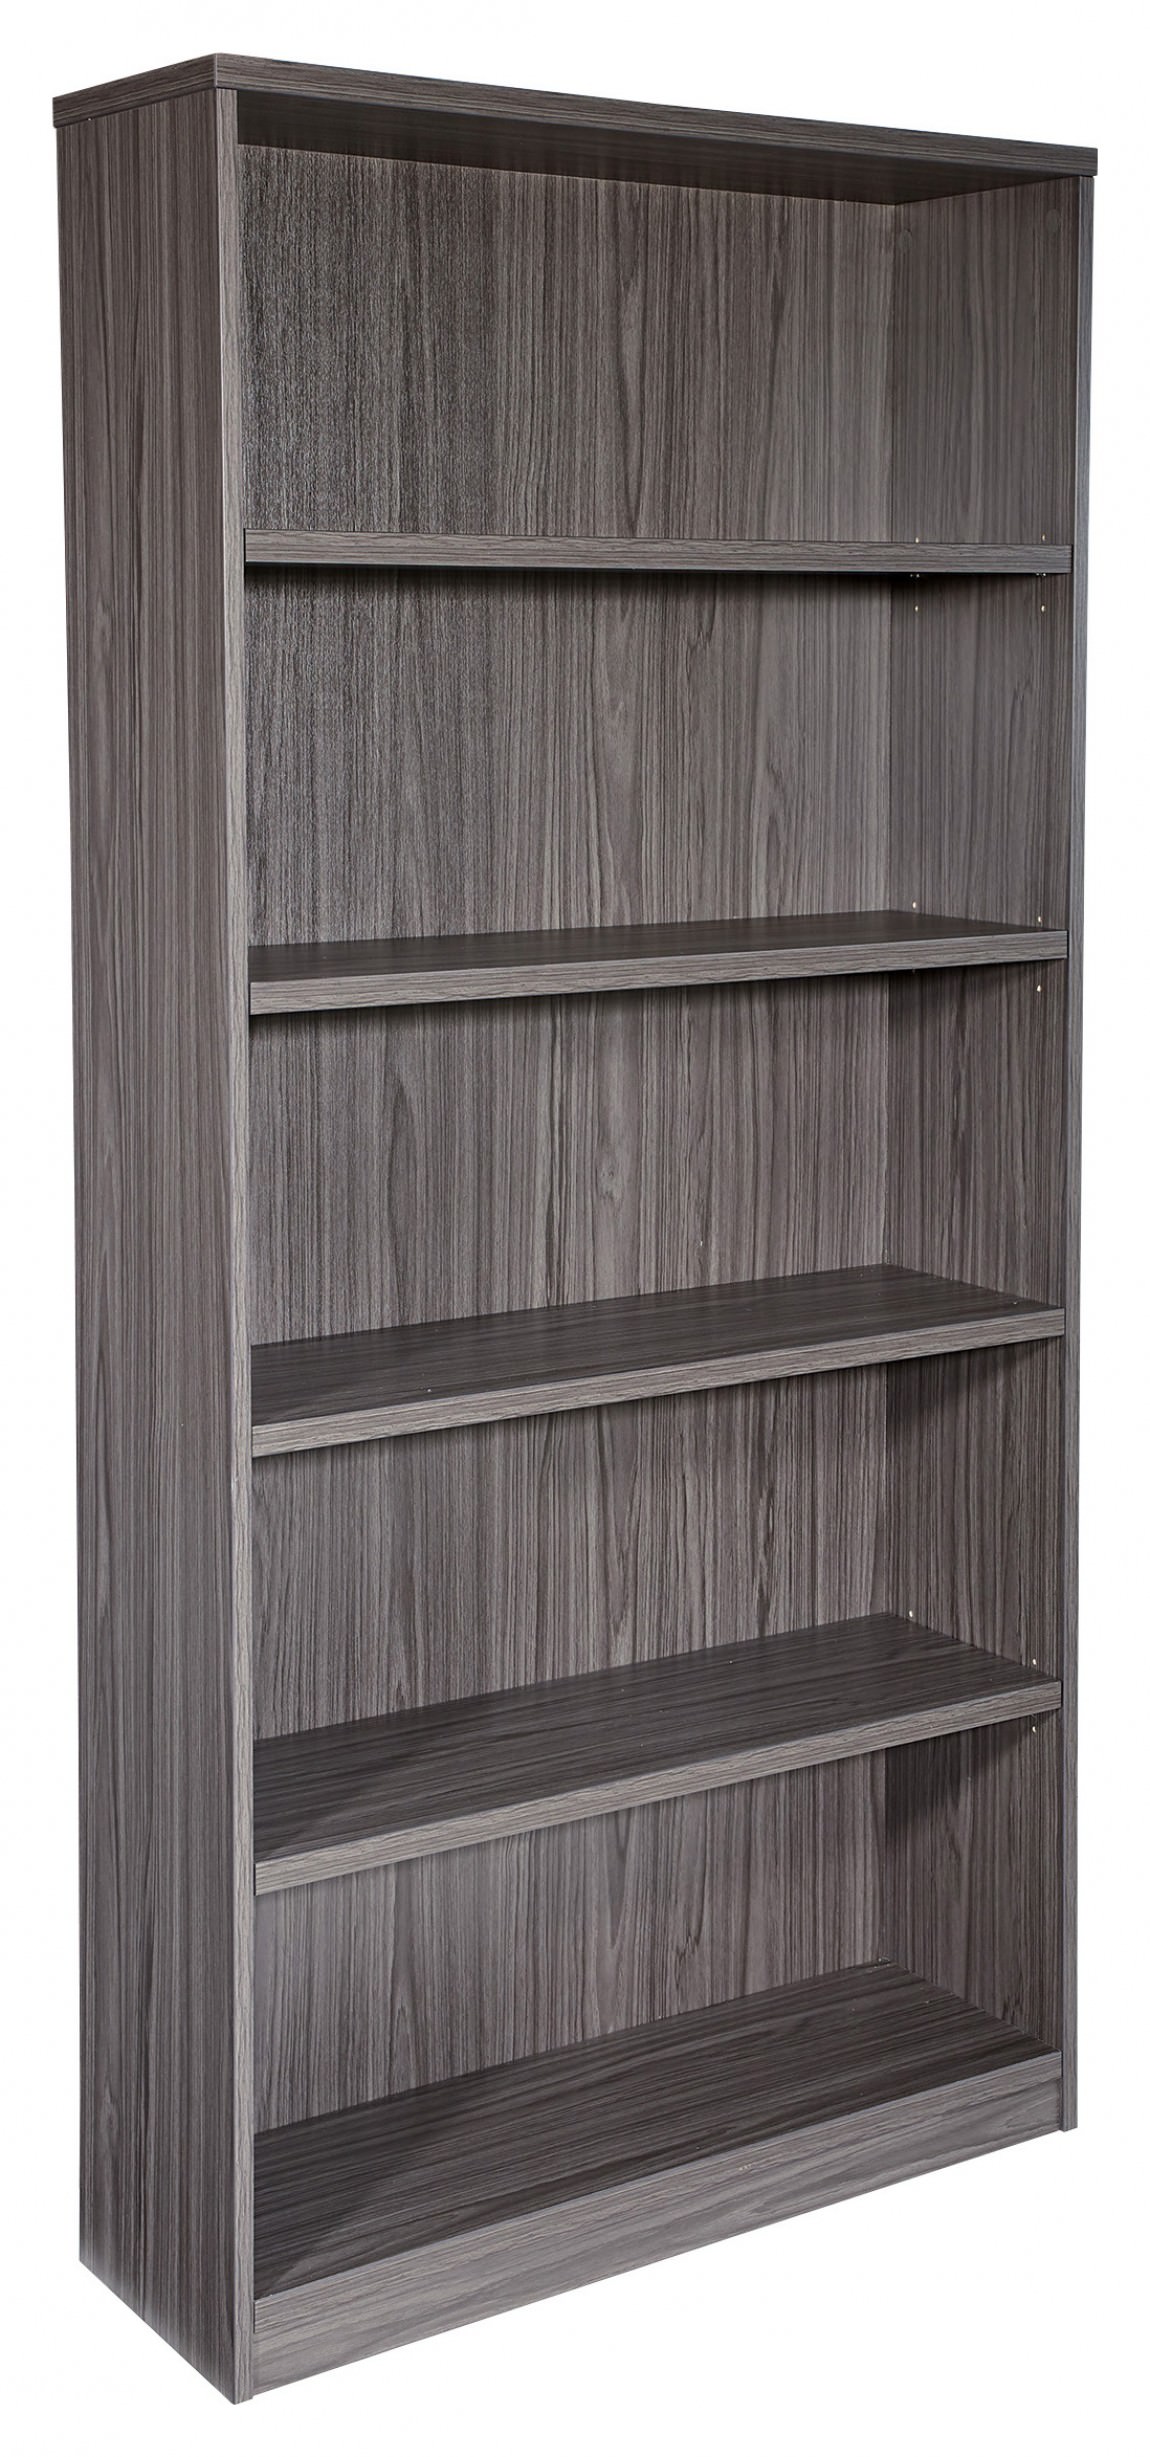 https://madisonliquidators.com/images/p/1150/20634-5-shelf-bookcase-72-tall-2.jpg